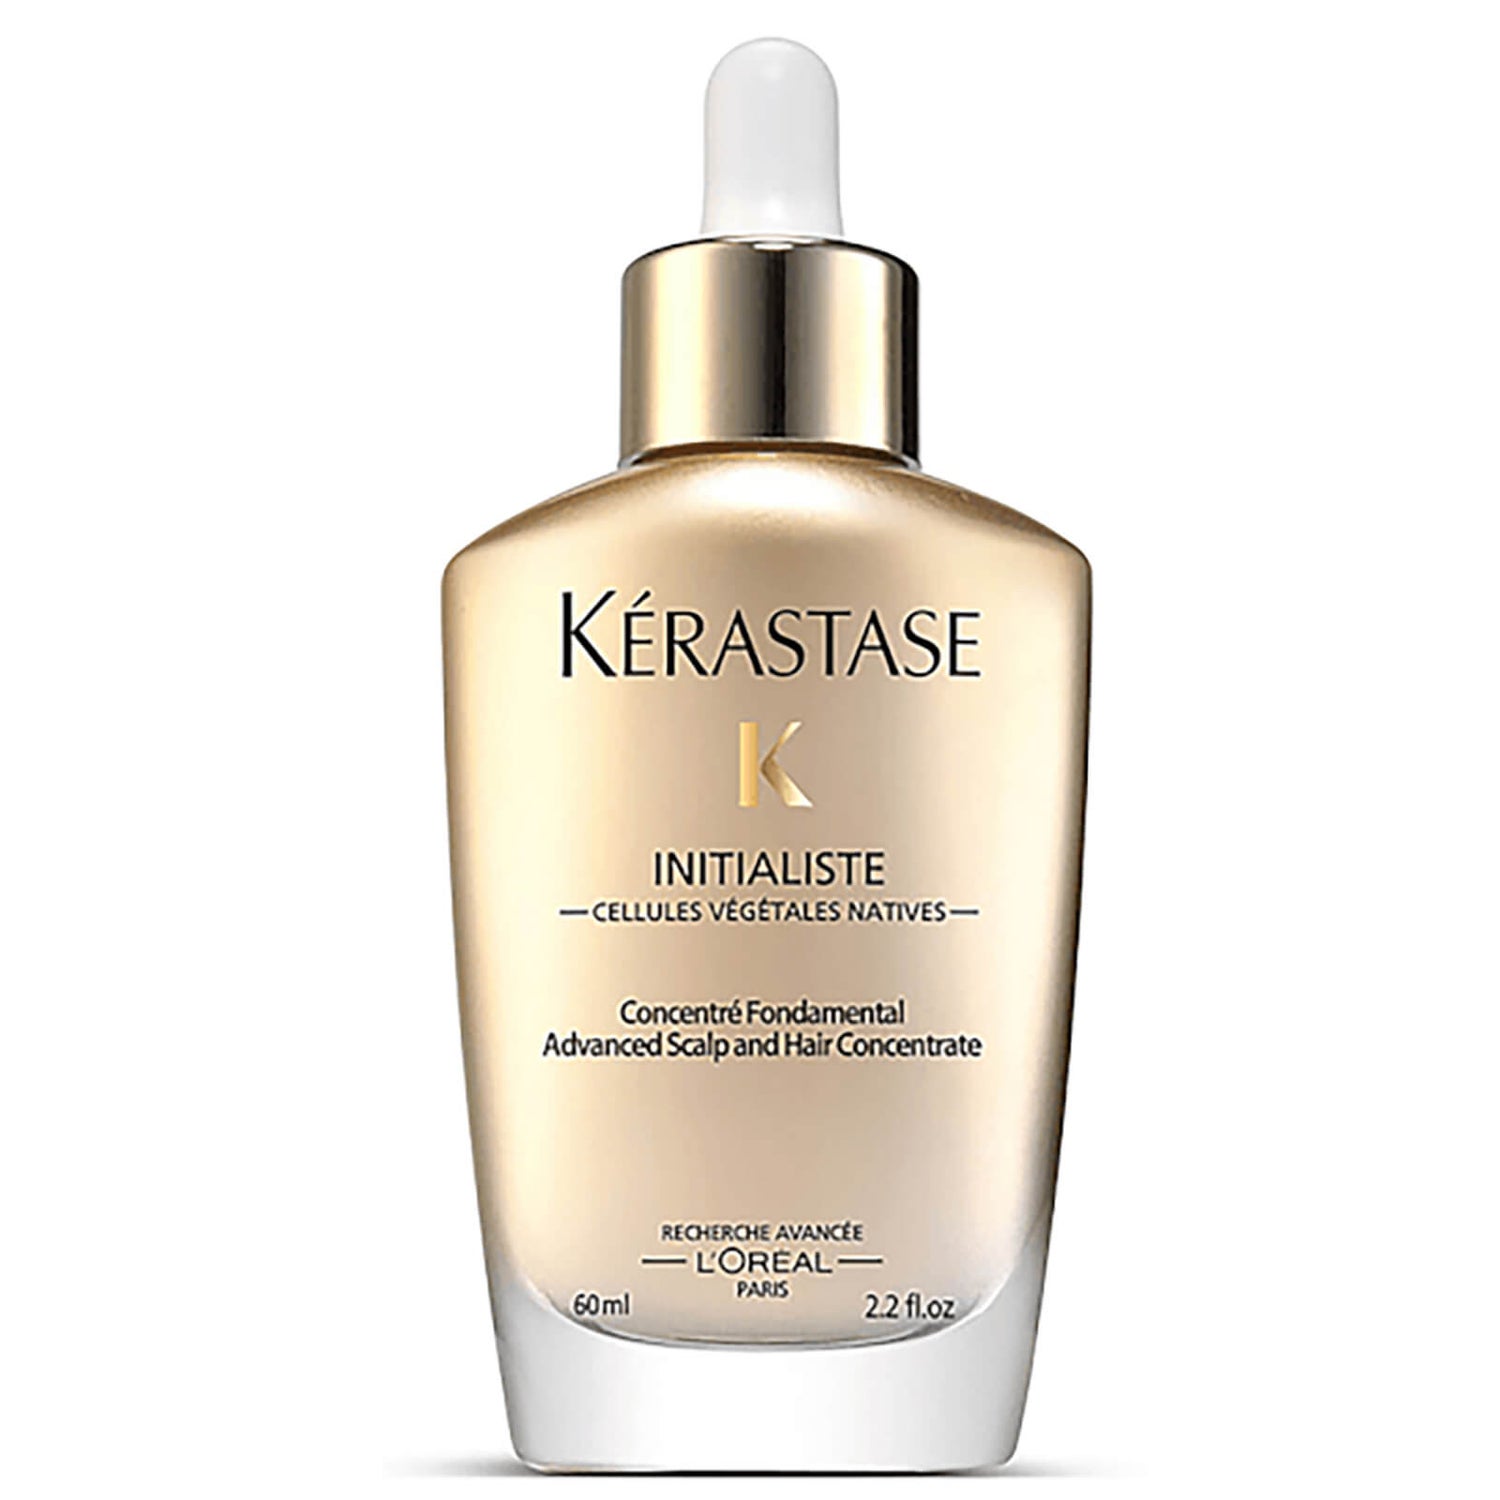 Kérastase Initialiste Advanced Scalp and Hair Concentate (60 ml)